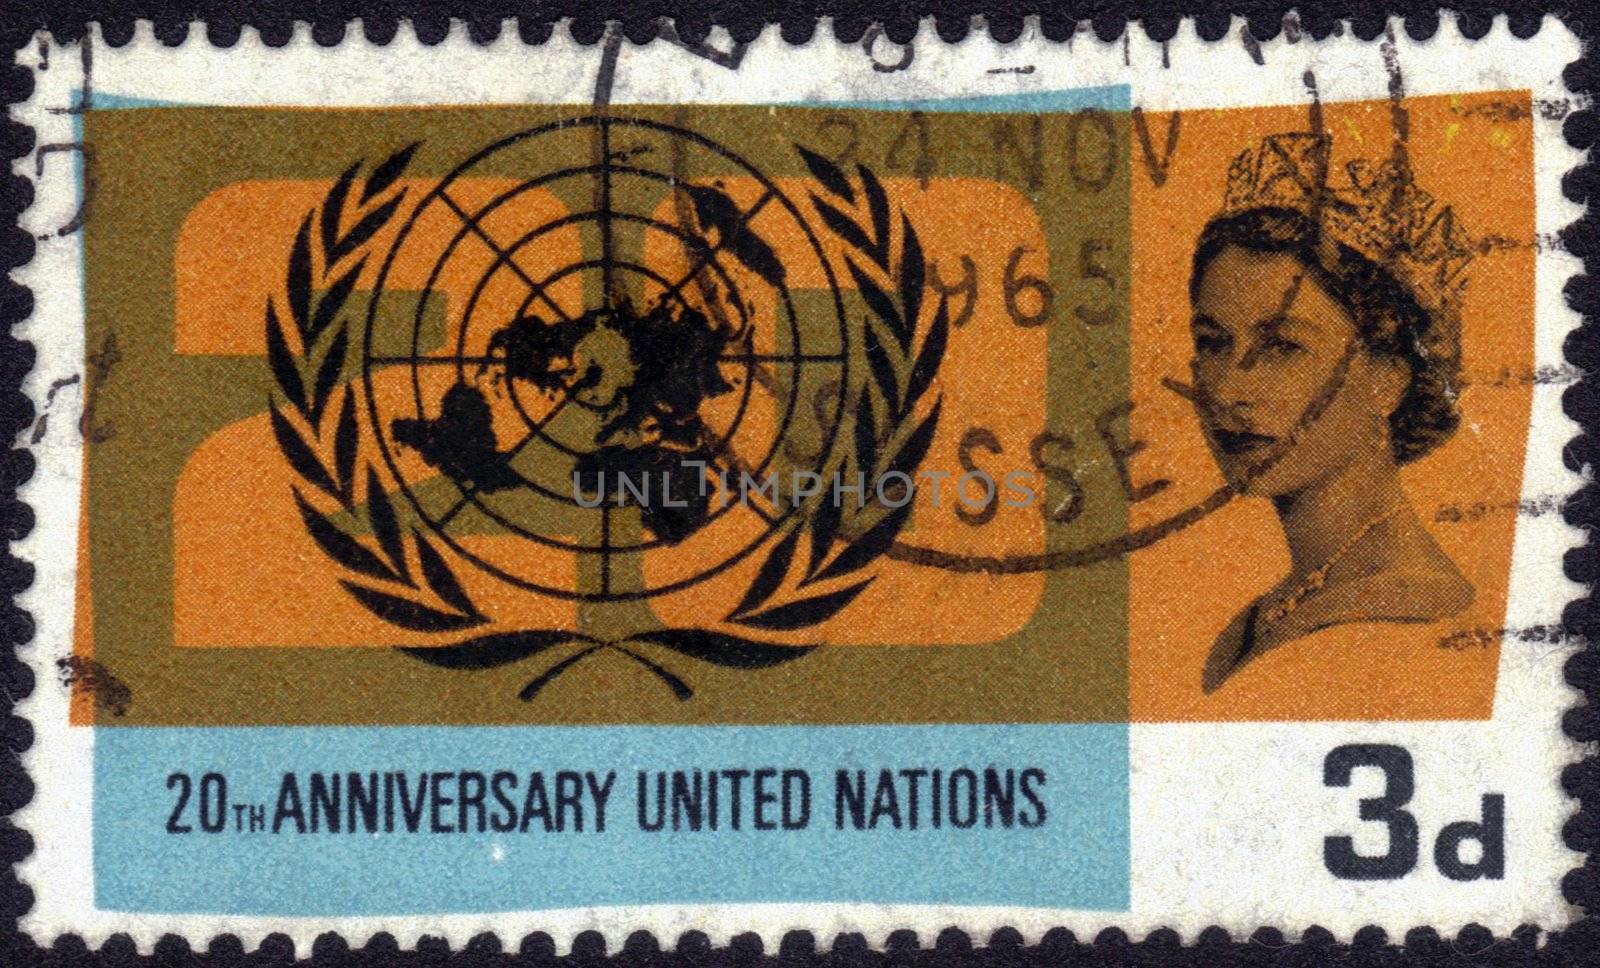 20th anniversary United Nations by irisphoto4